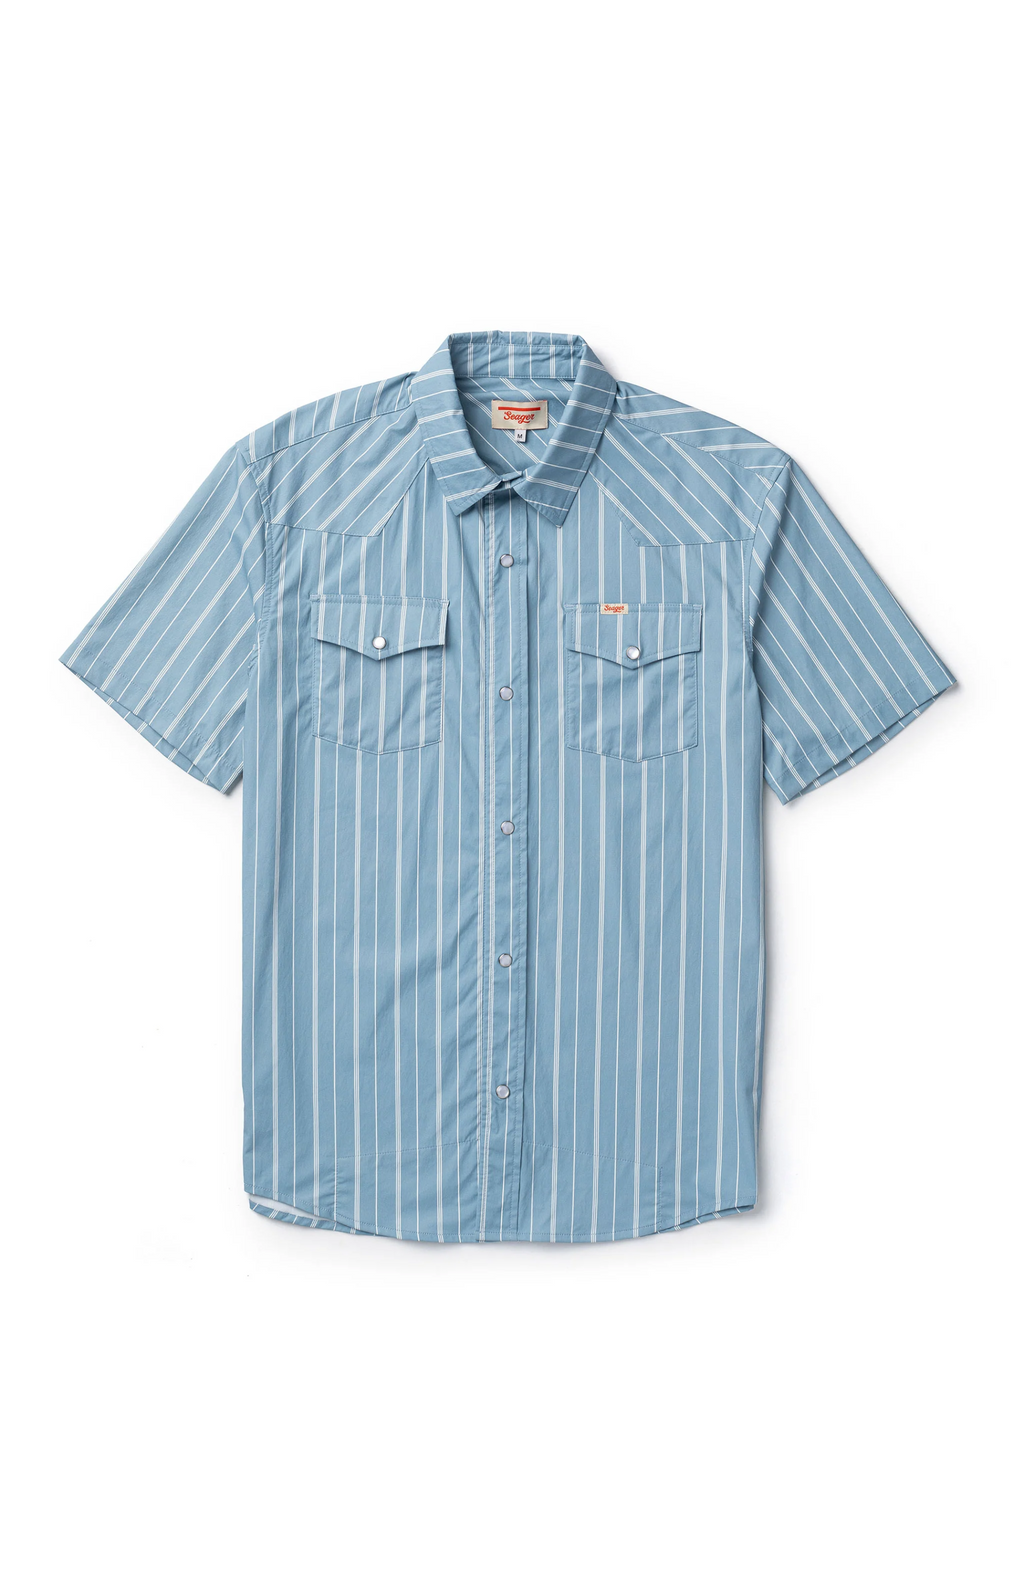 Seager - El Ranchero Short Sleeve Shirt